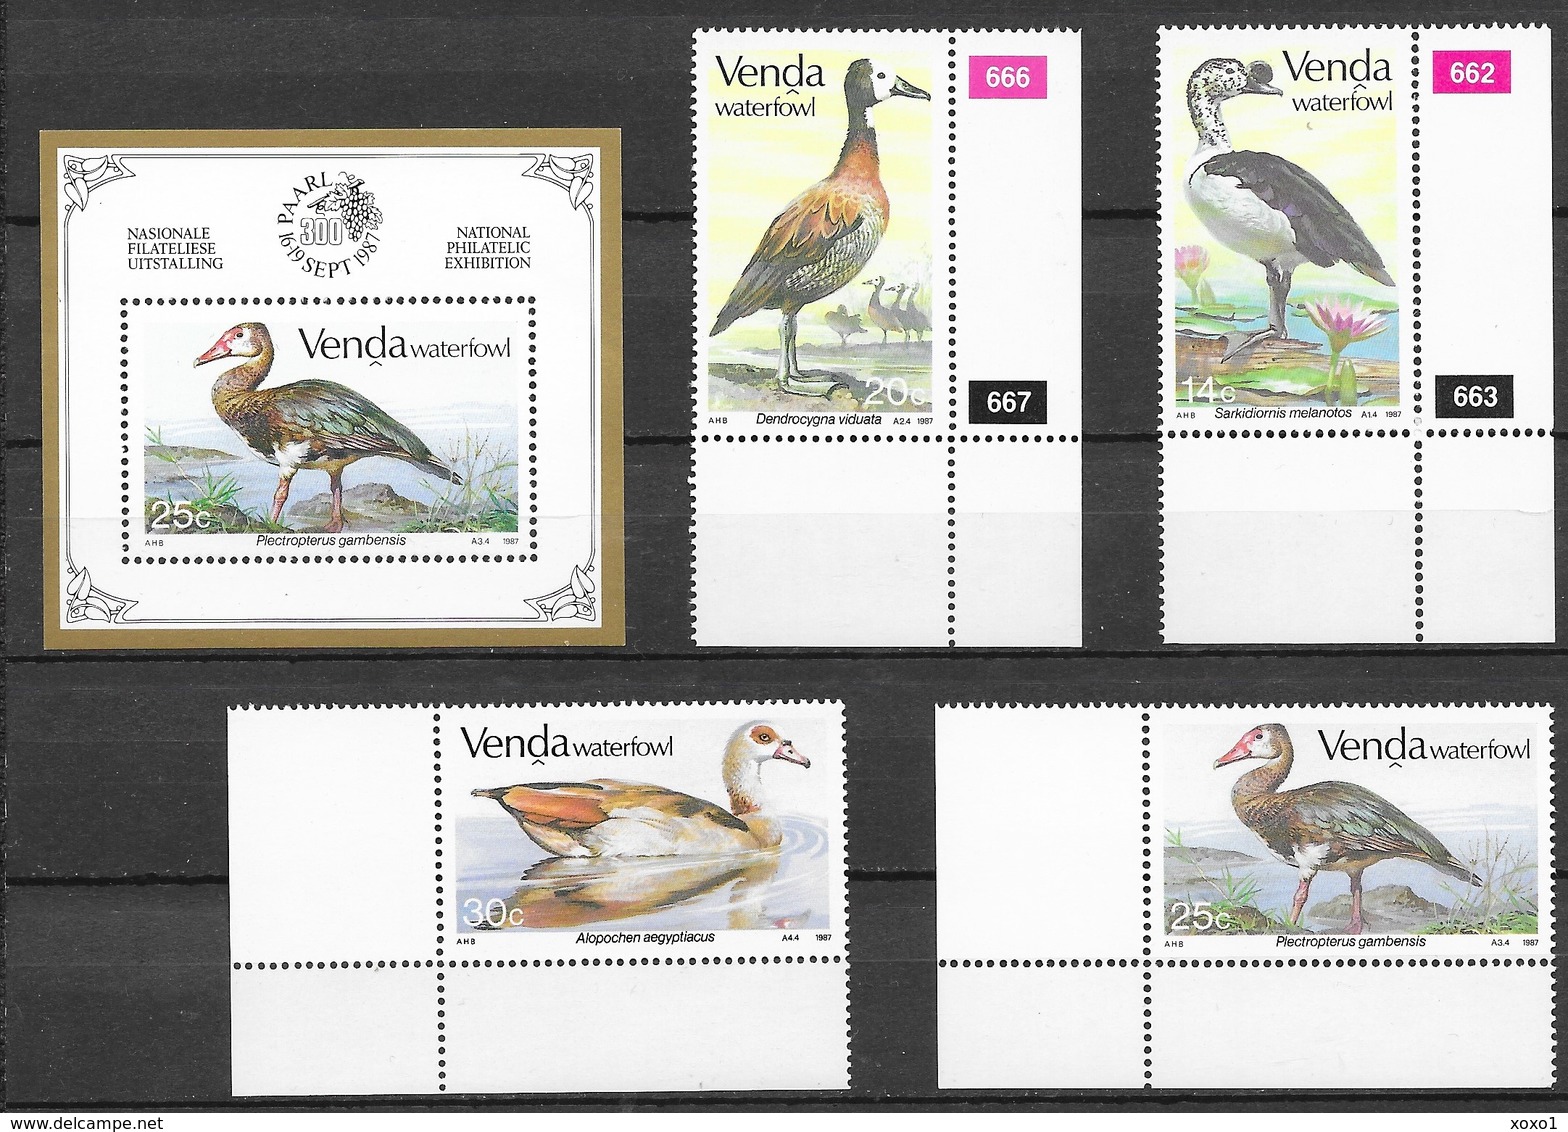 Venda South Africa 1987 MiNr. 150 - 153 (Block 3) Birds Geese 4v+1bl MNH**  15.50 € - Geese